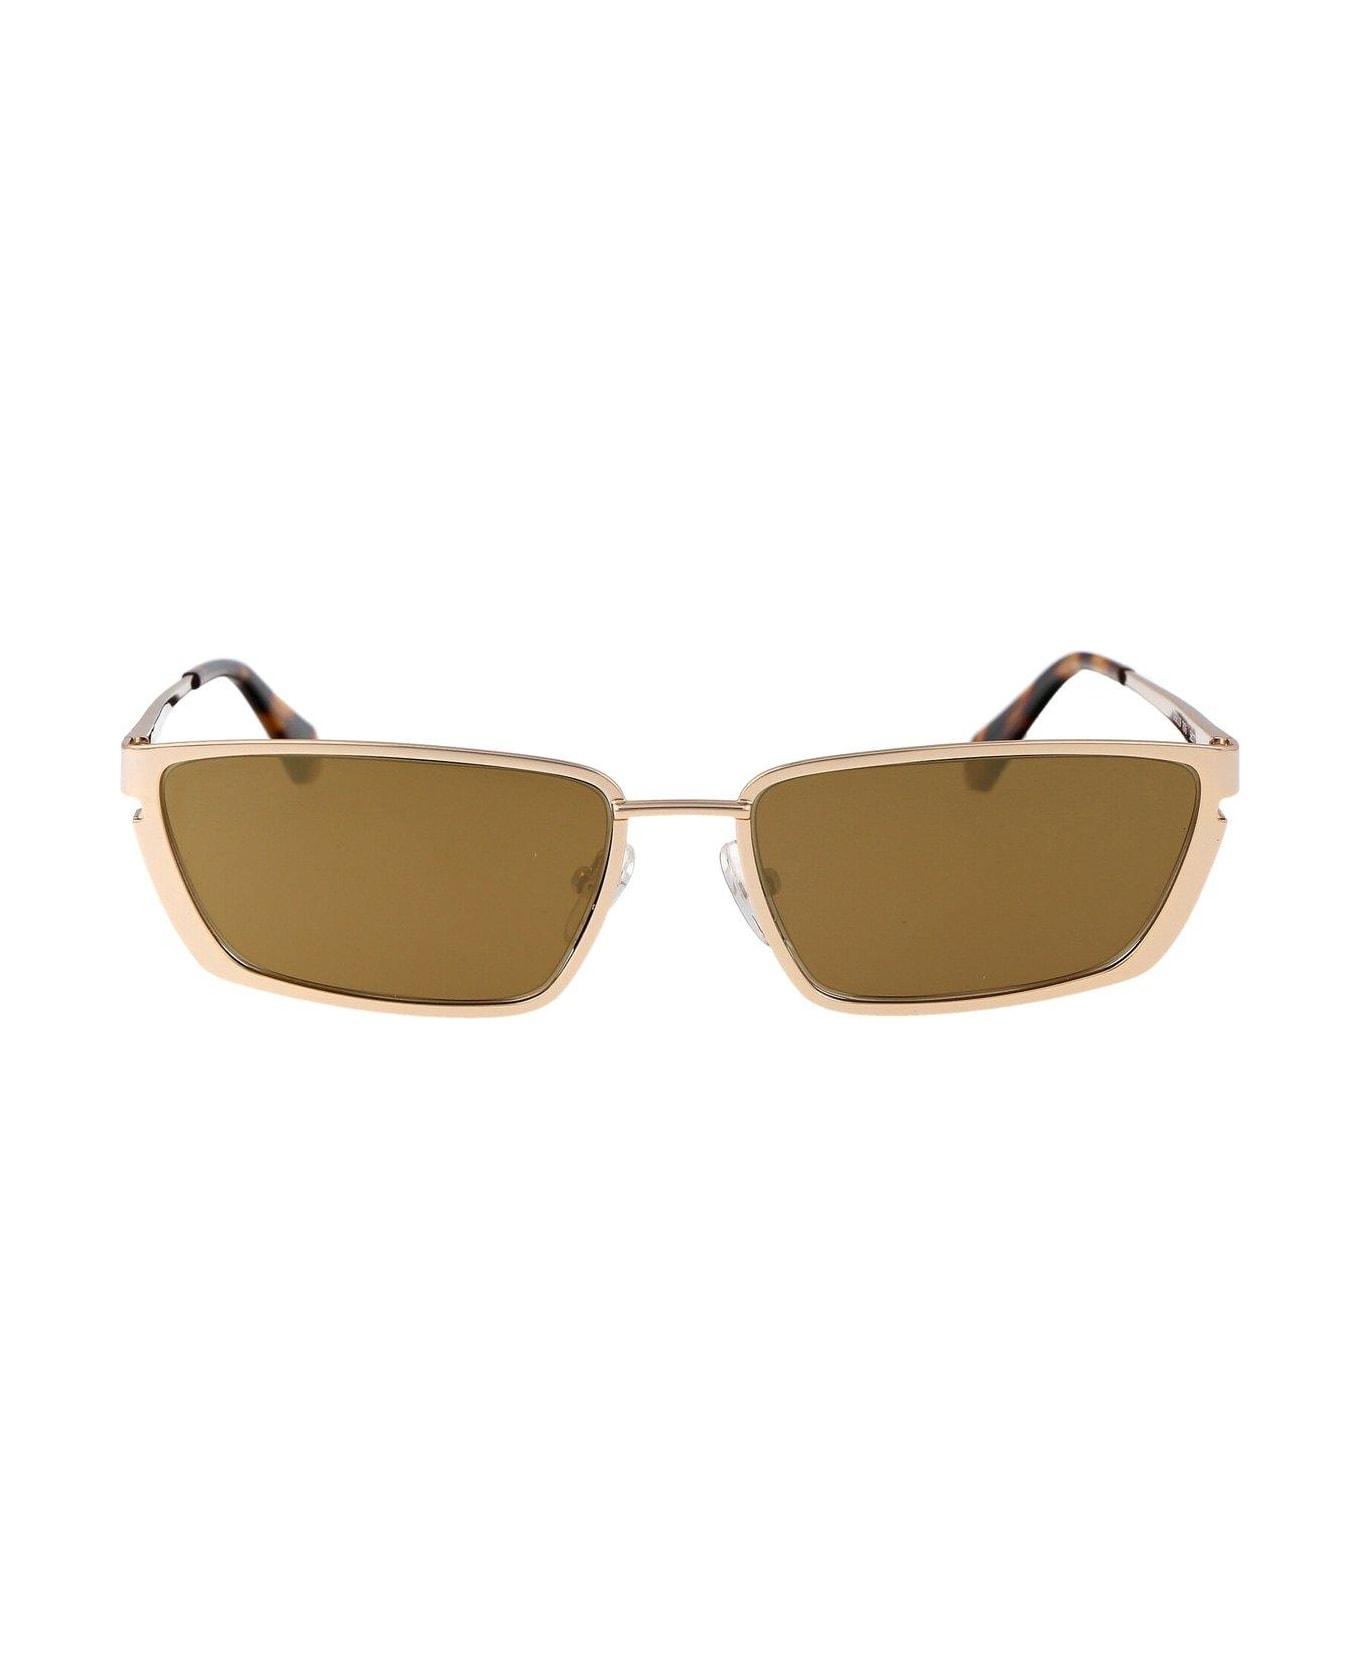 Off-White Richfield Sunglasses - 7676 GOLD GOLD サングラス